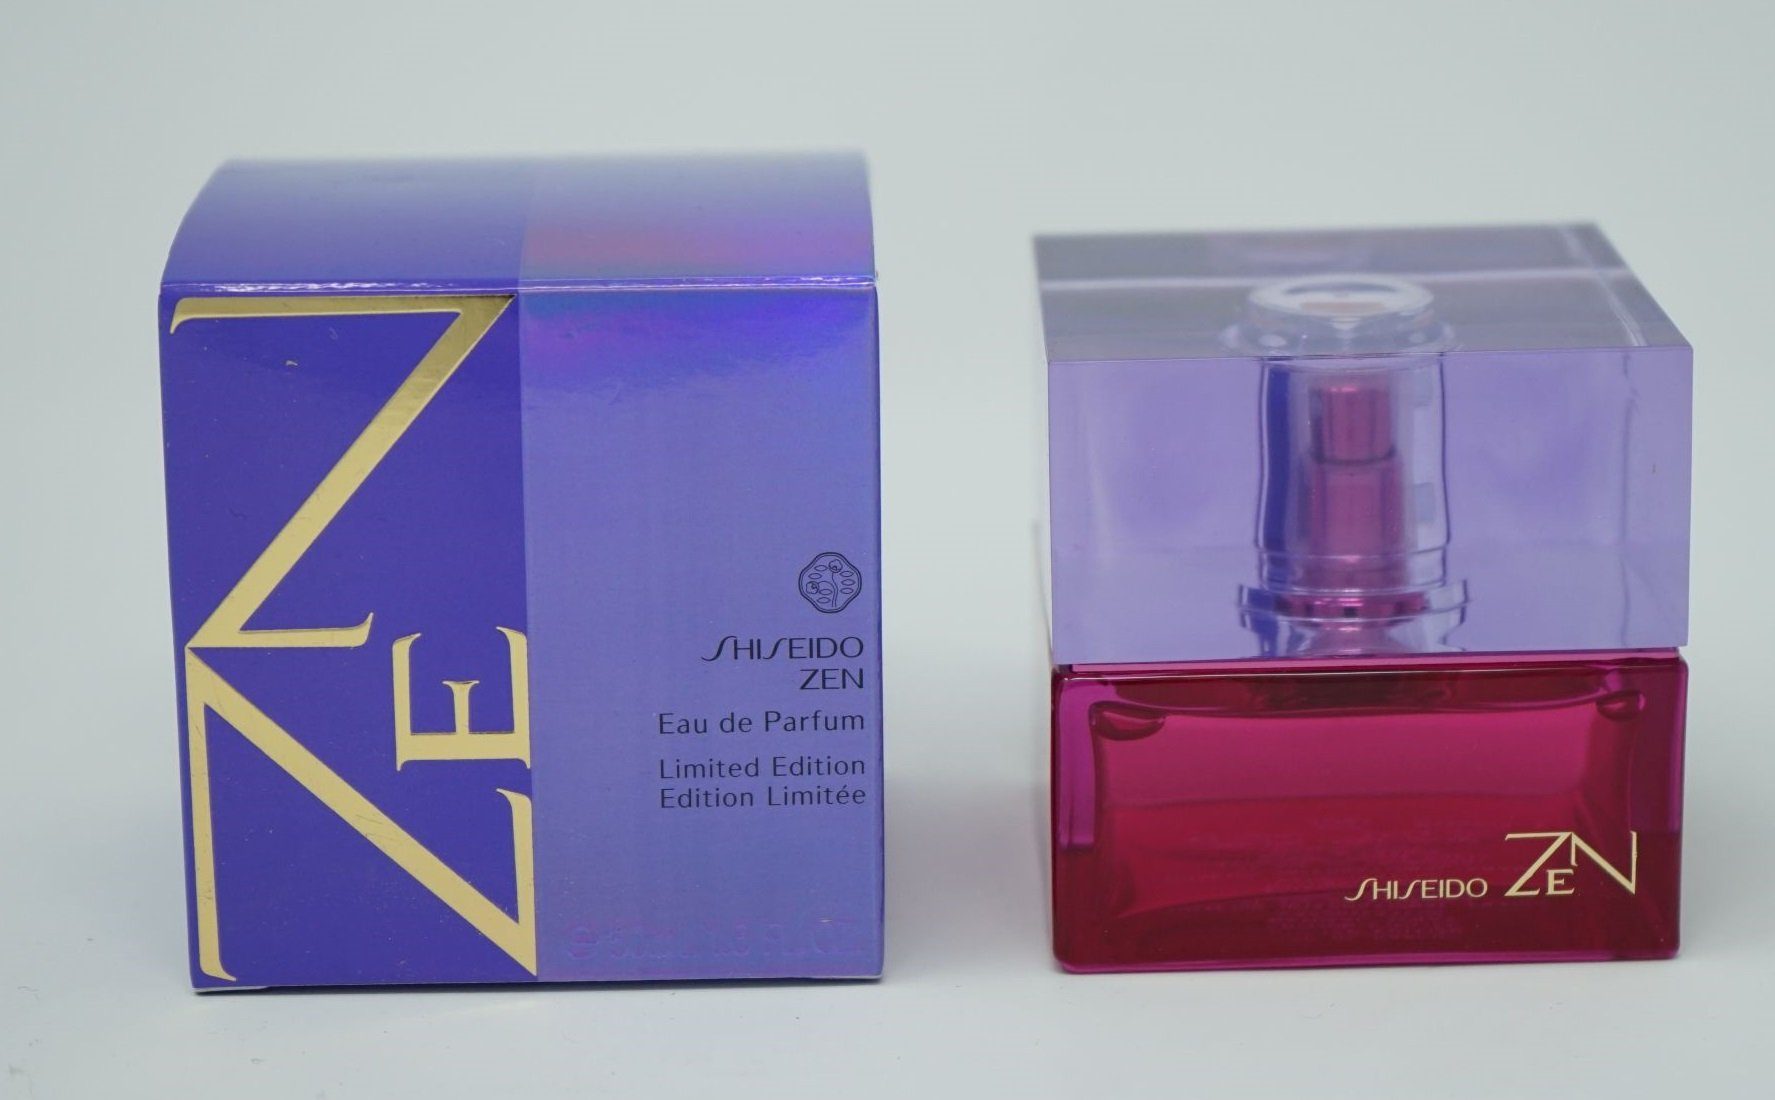 SHISEIDO Eau de Parfum Limited de Edition 50ml Parfum Zen Eau Shiseido